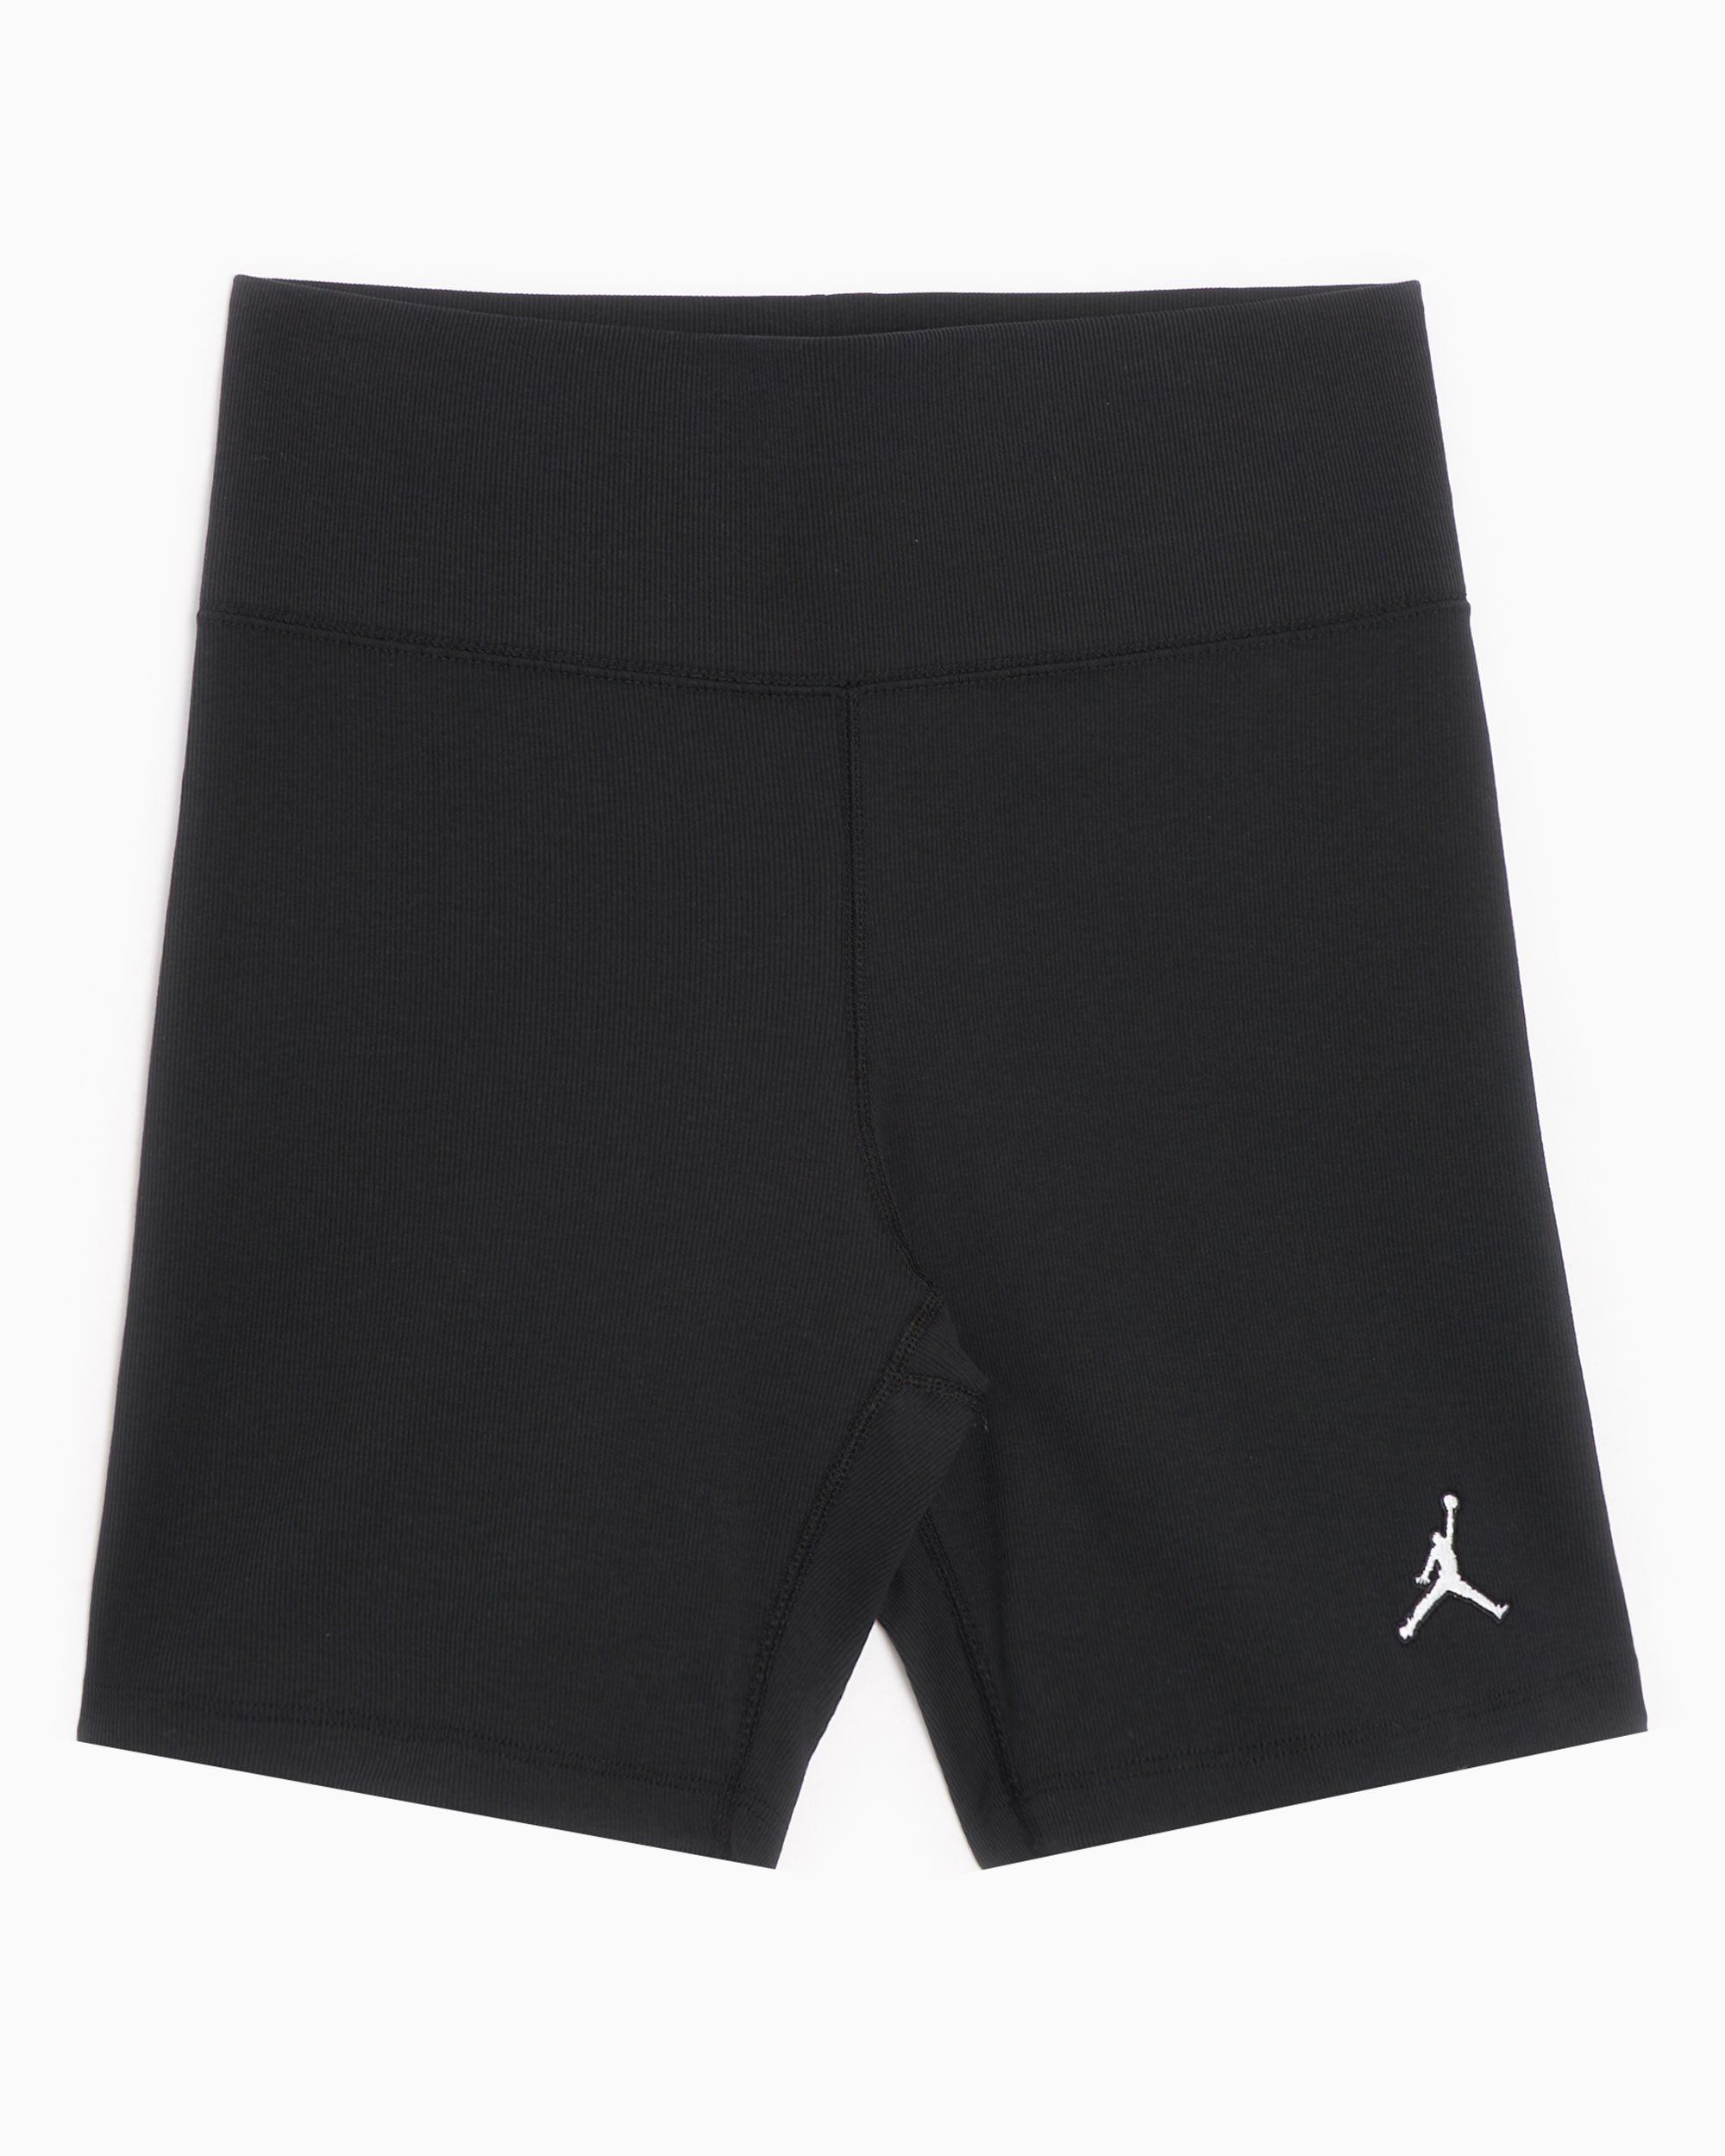 Jordan Women's Ribbed Shorts Black DZ3180-010| Buy Online at FOOTDISTRICT